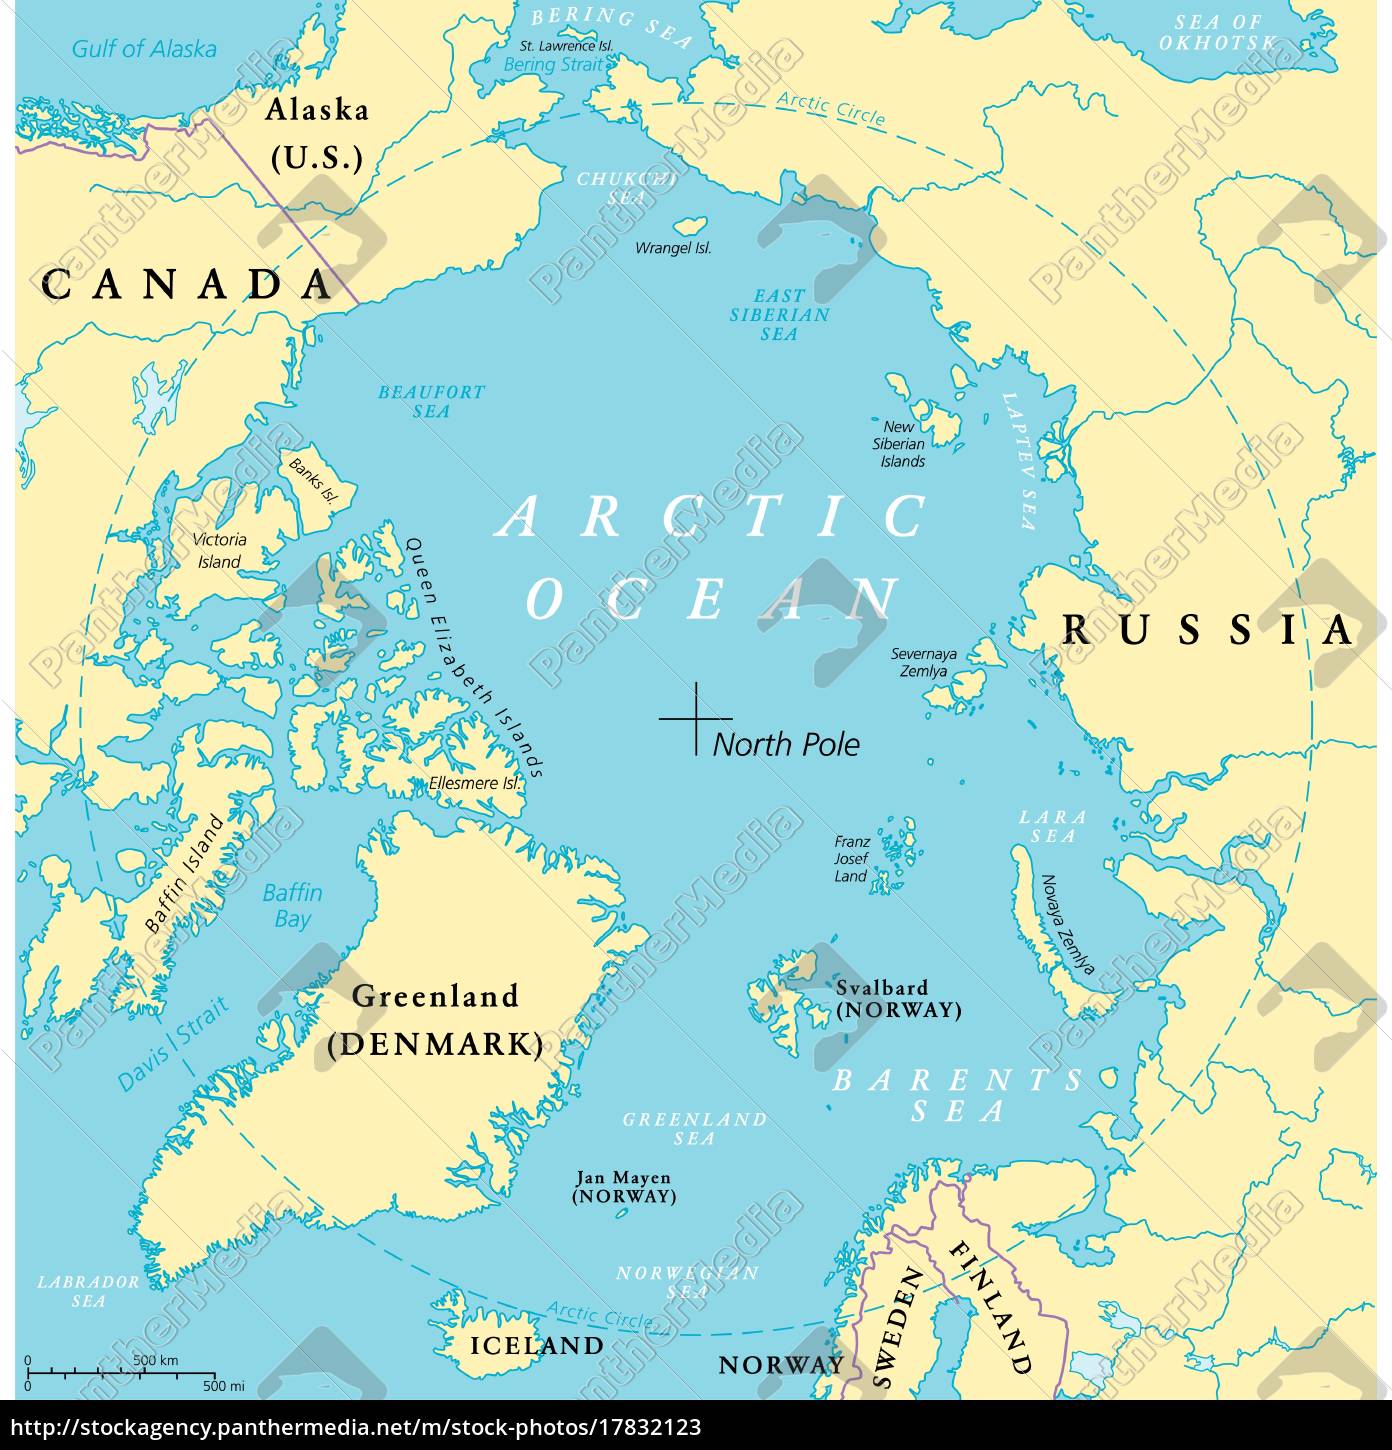 Arctic Ocean Map - Royalty free image - #17832123 | PantherMedia Stock Agency